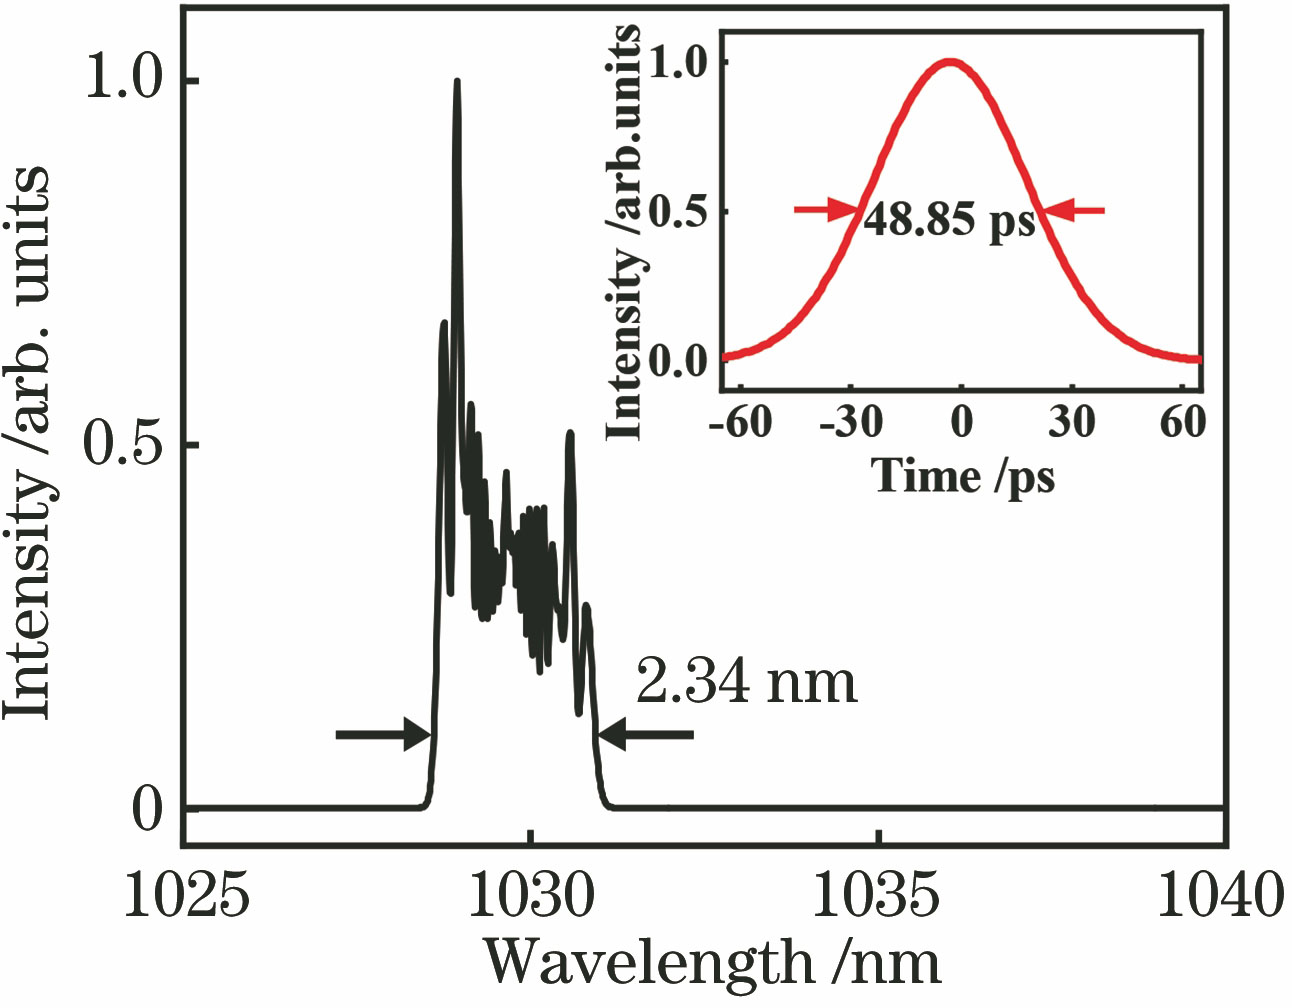 Measured spectrum and pulse width of Yb-doped fiber laser